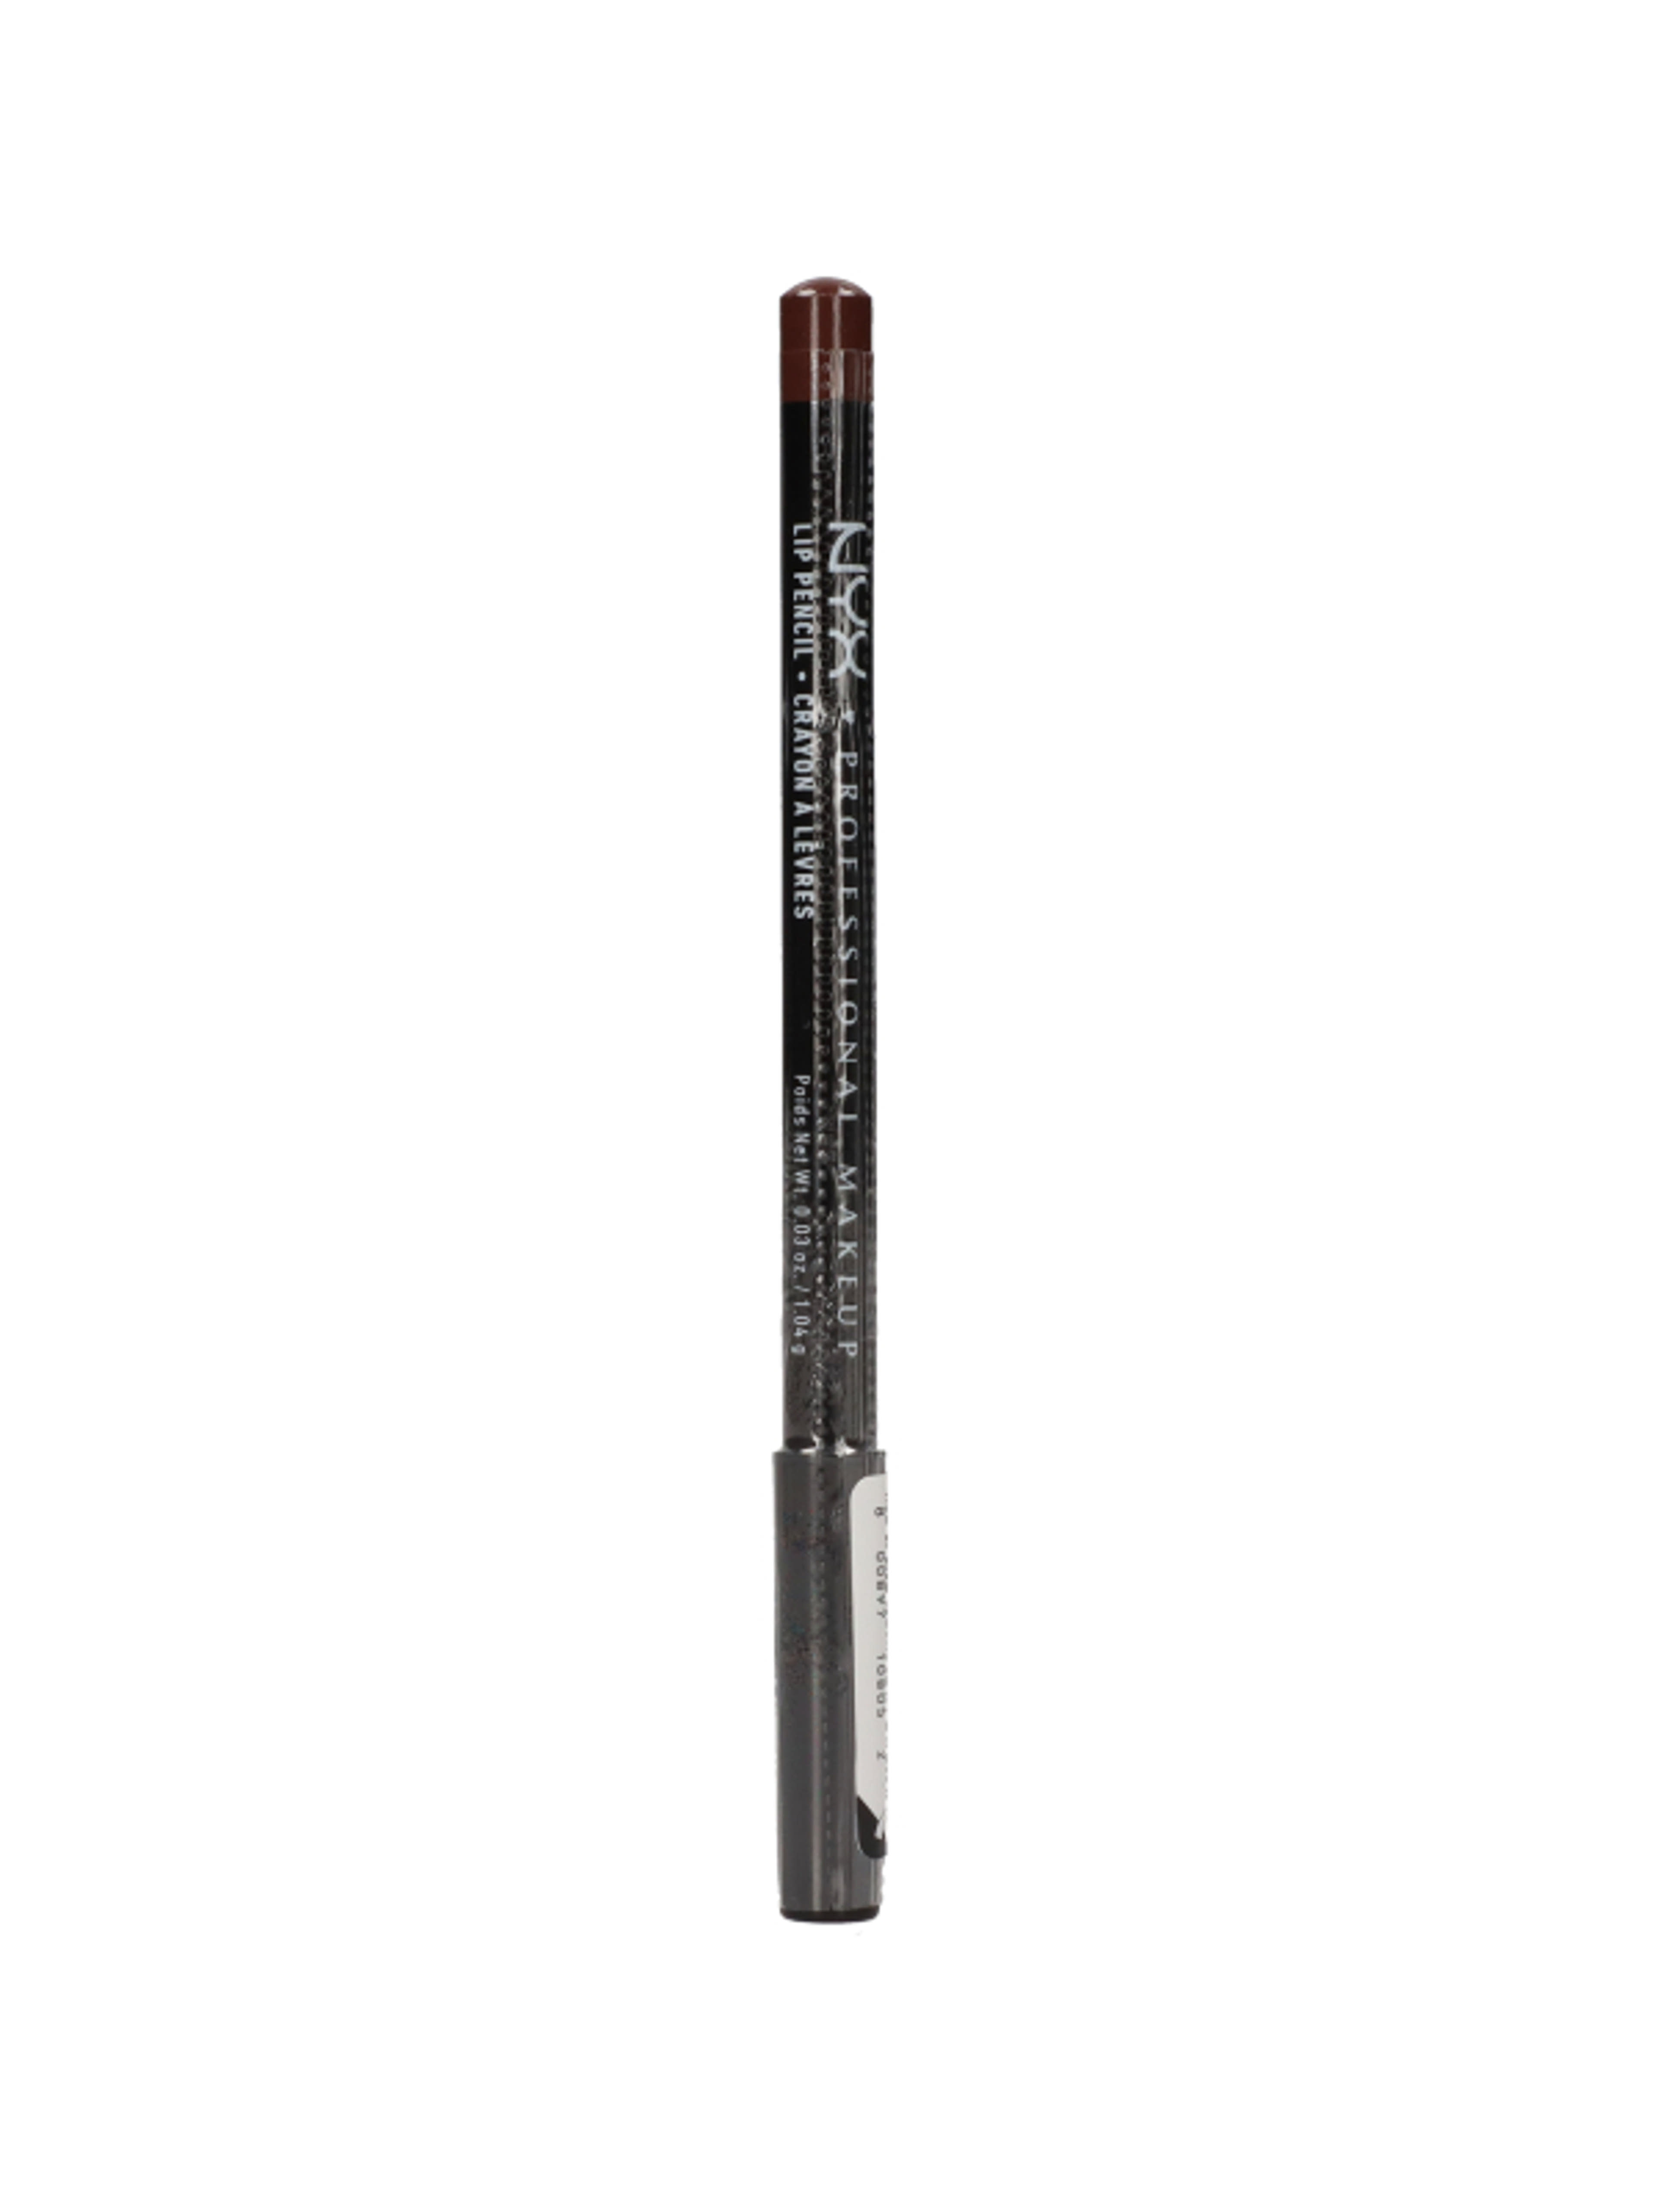 NYX Professional Makeup Slim Lip Pencil ajakkontúr ceruza, Capuccino - 1 db